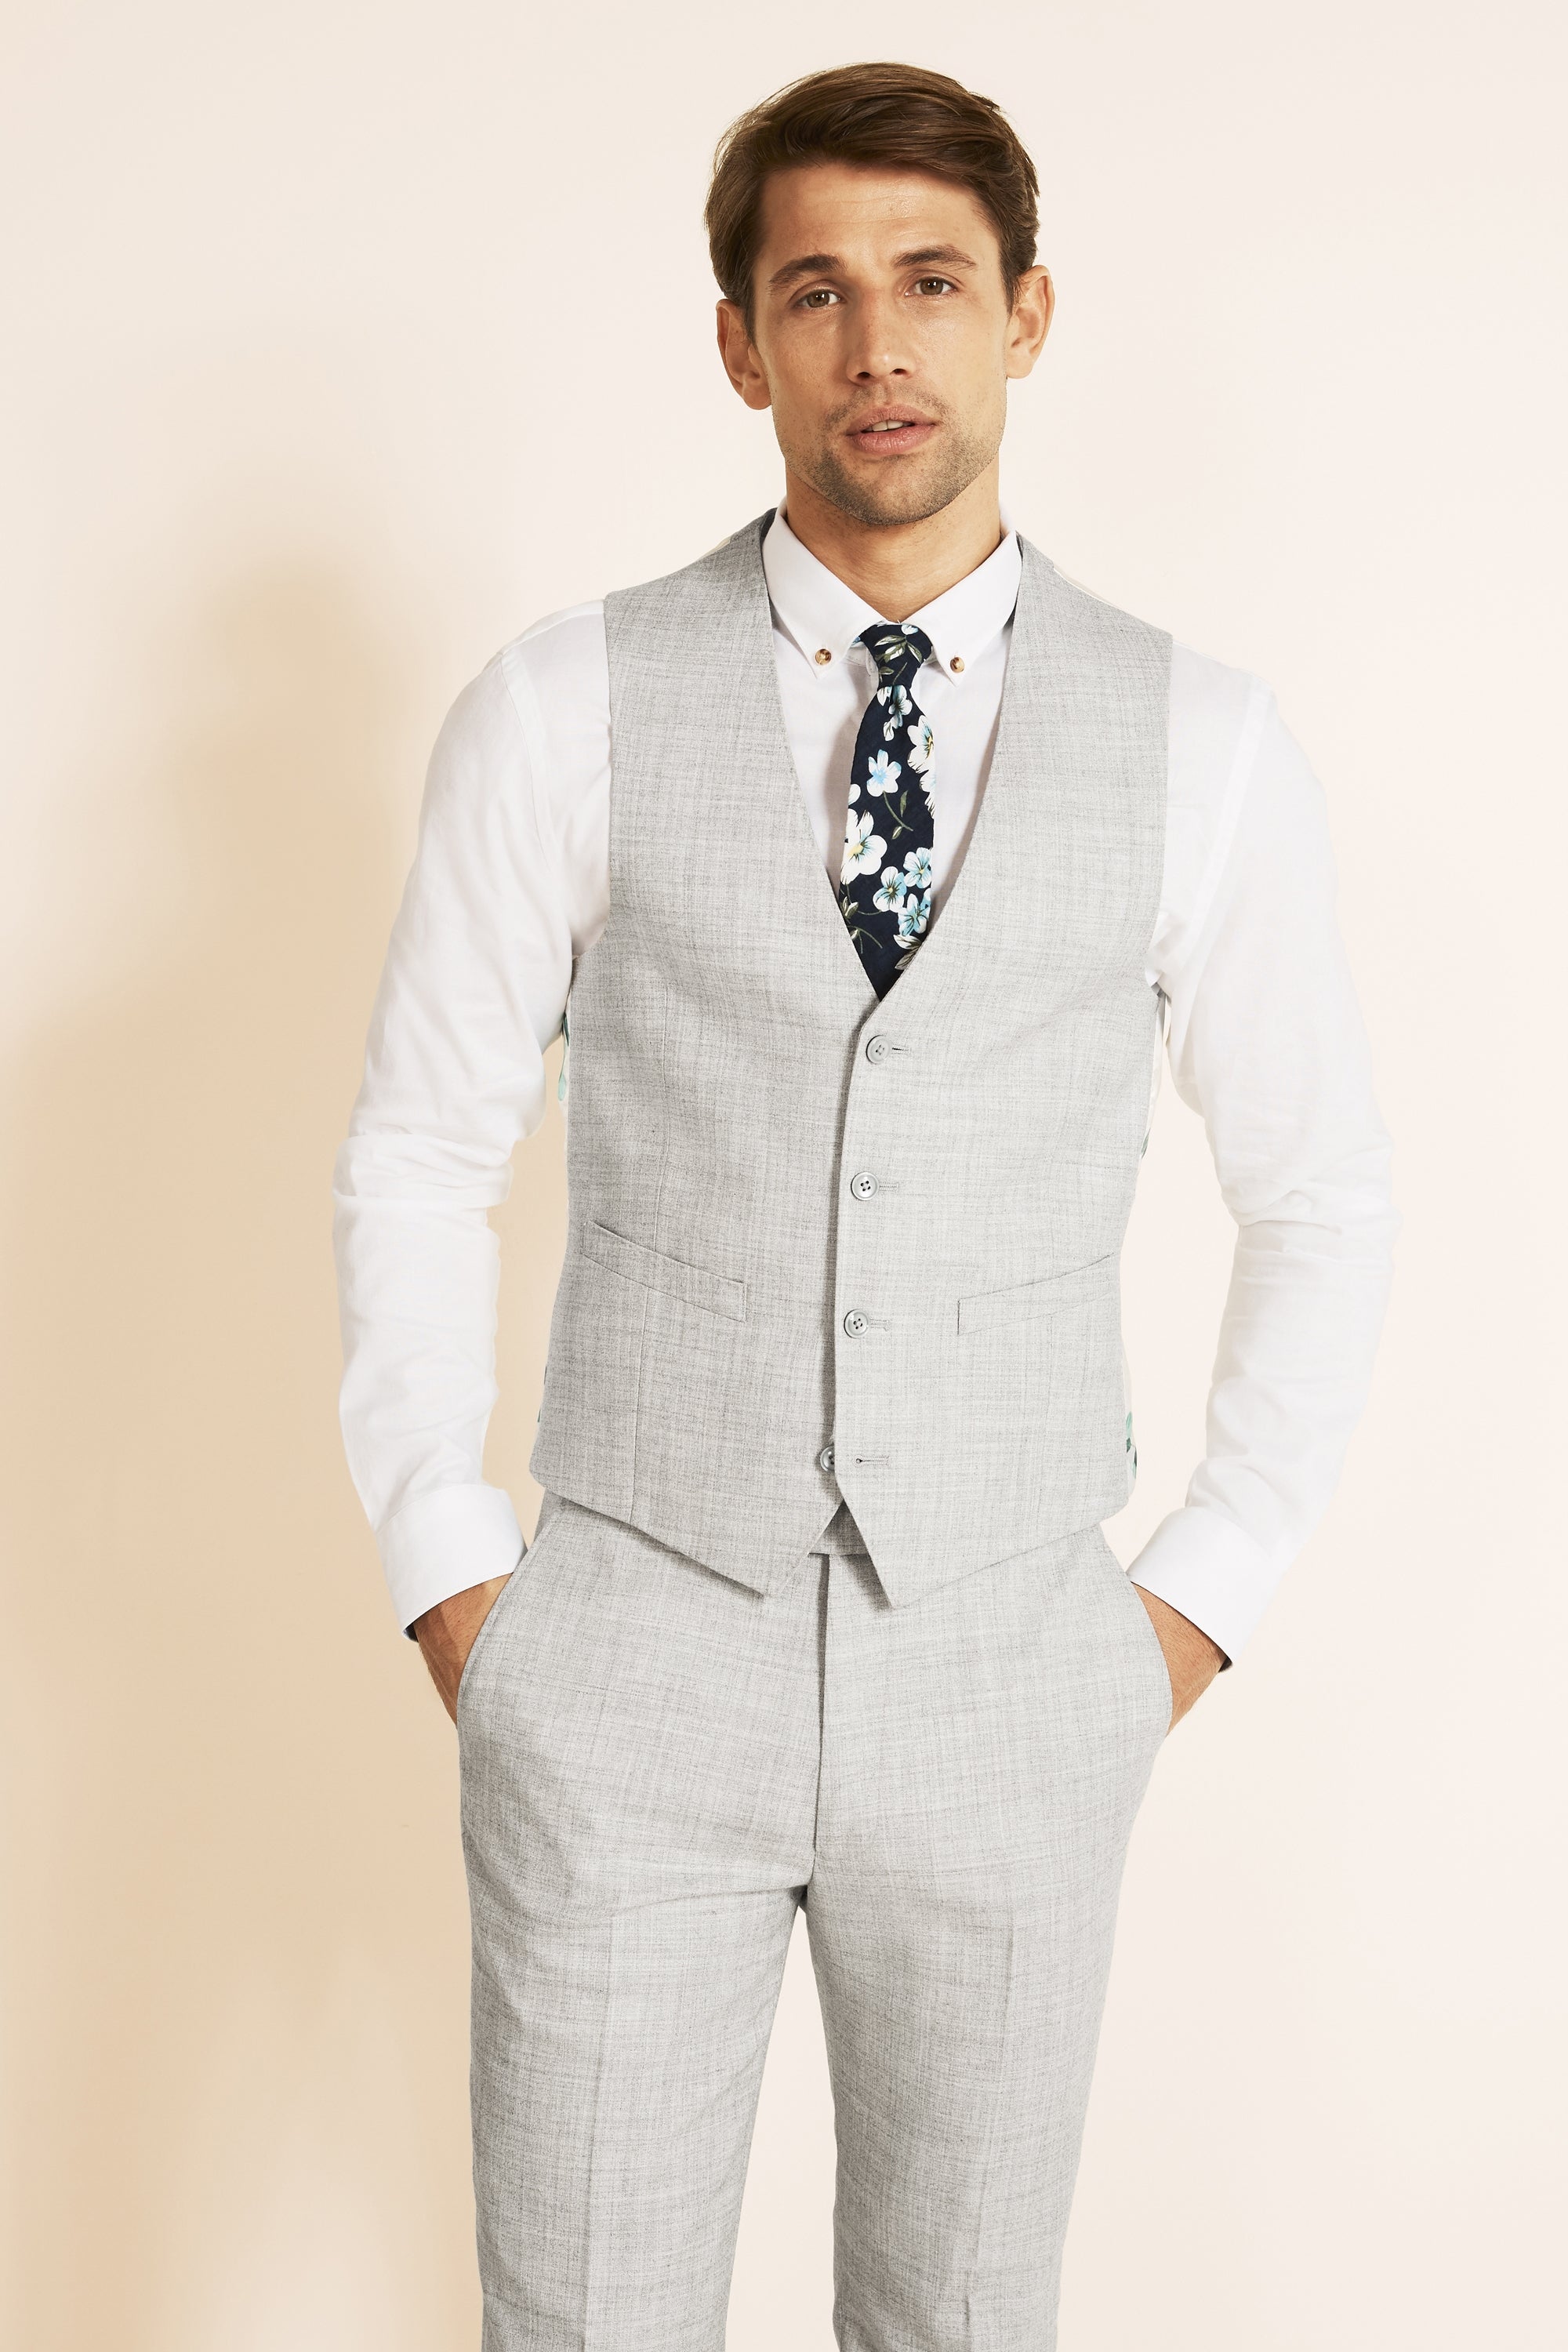 Rennie Street Slim Fit Mixed Light Grey Suit With Herringbone Waistcoat   MrGuild